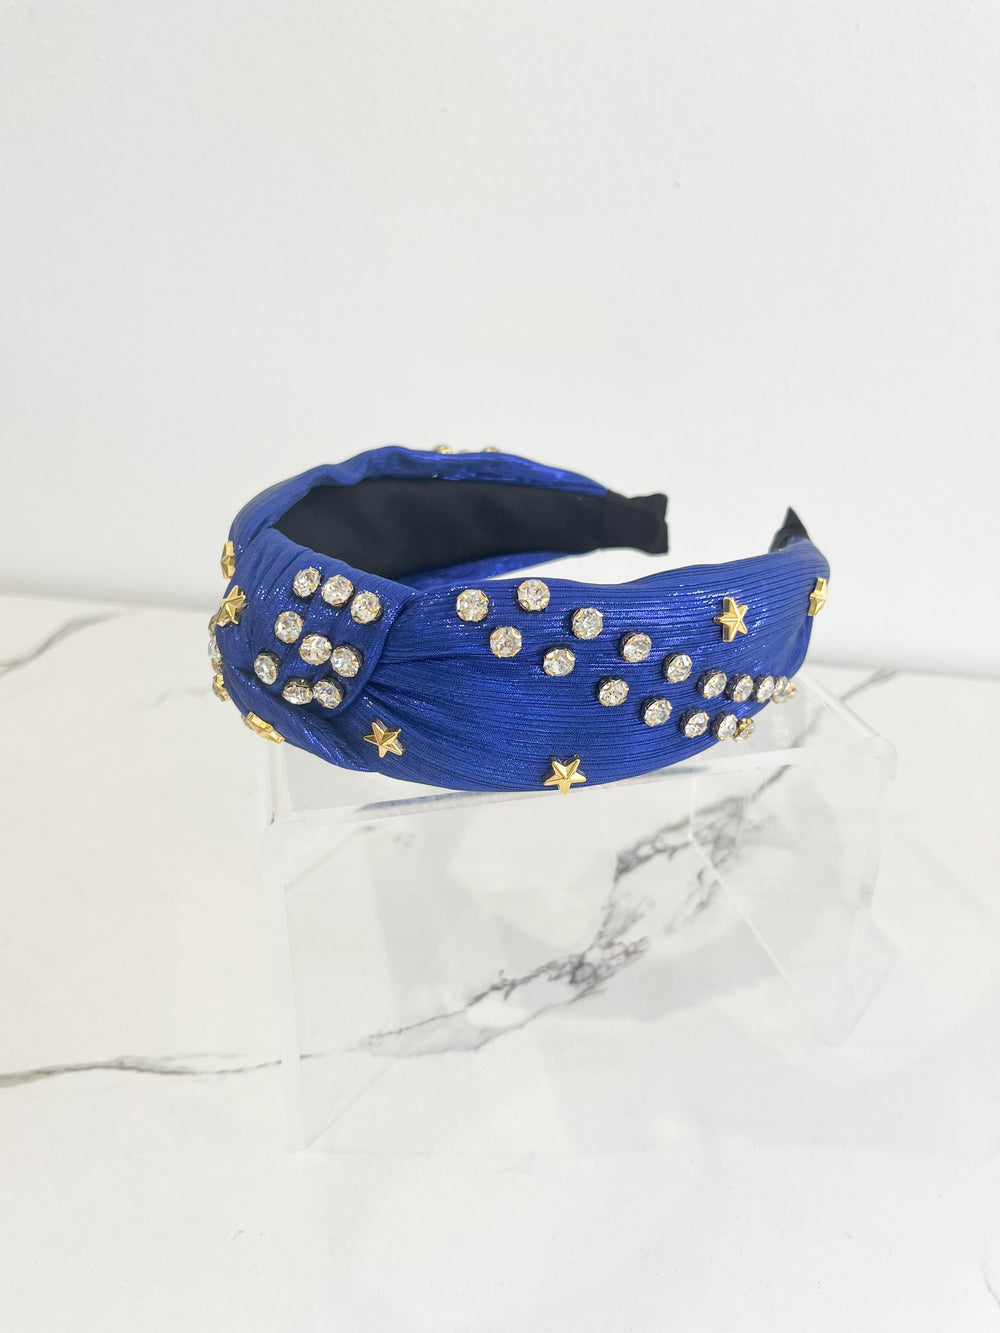 WS 600 Accessories - Star Spangled Blue Studded Headband